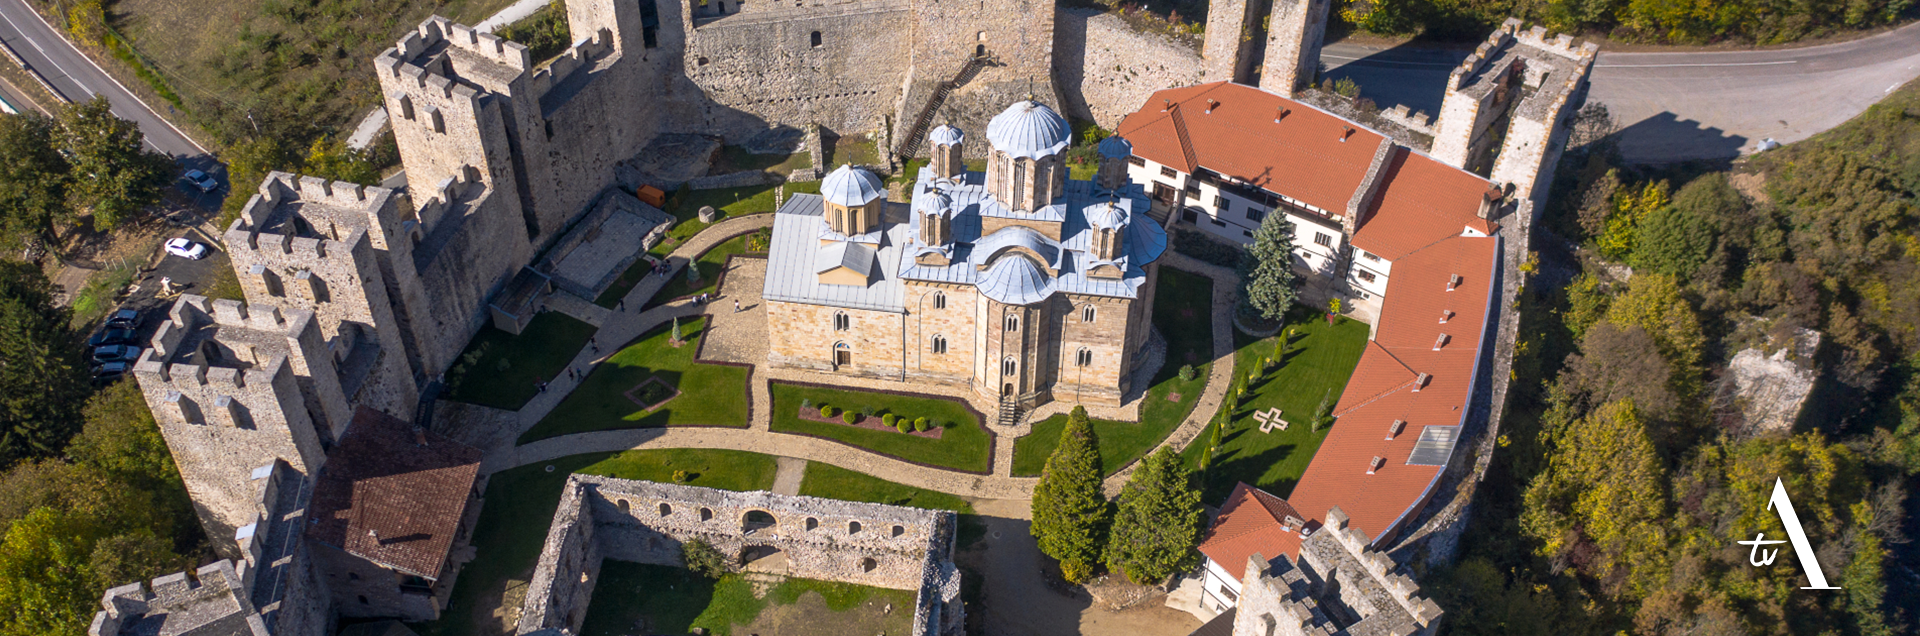 manastir_manasija_portal.png